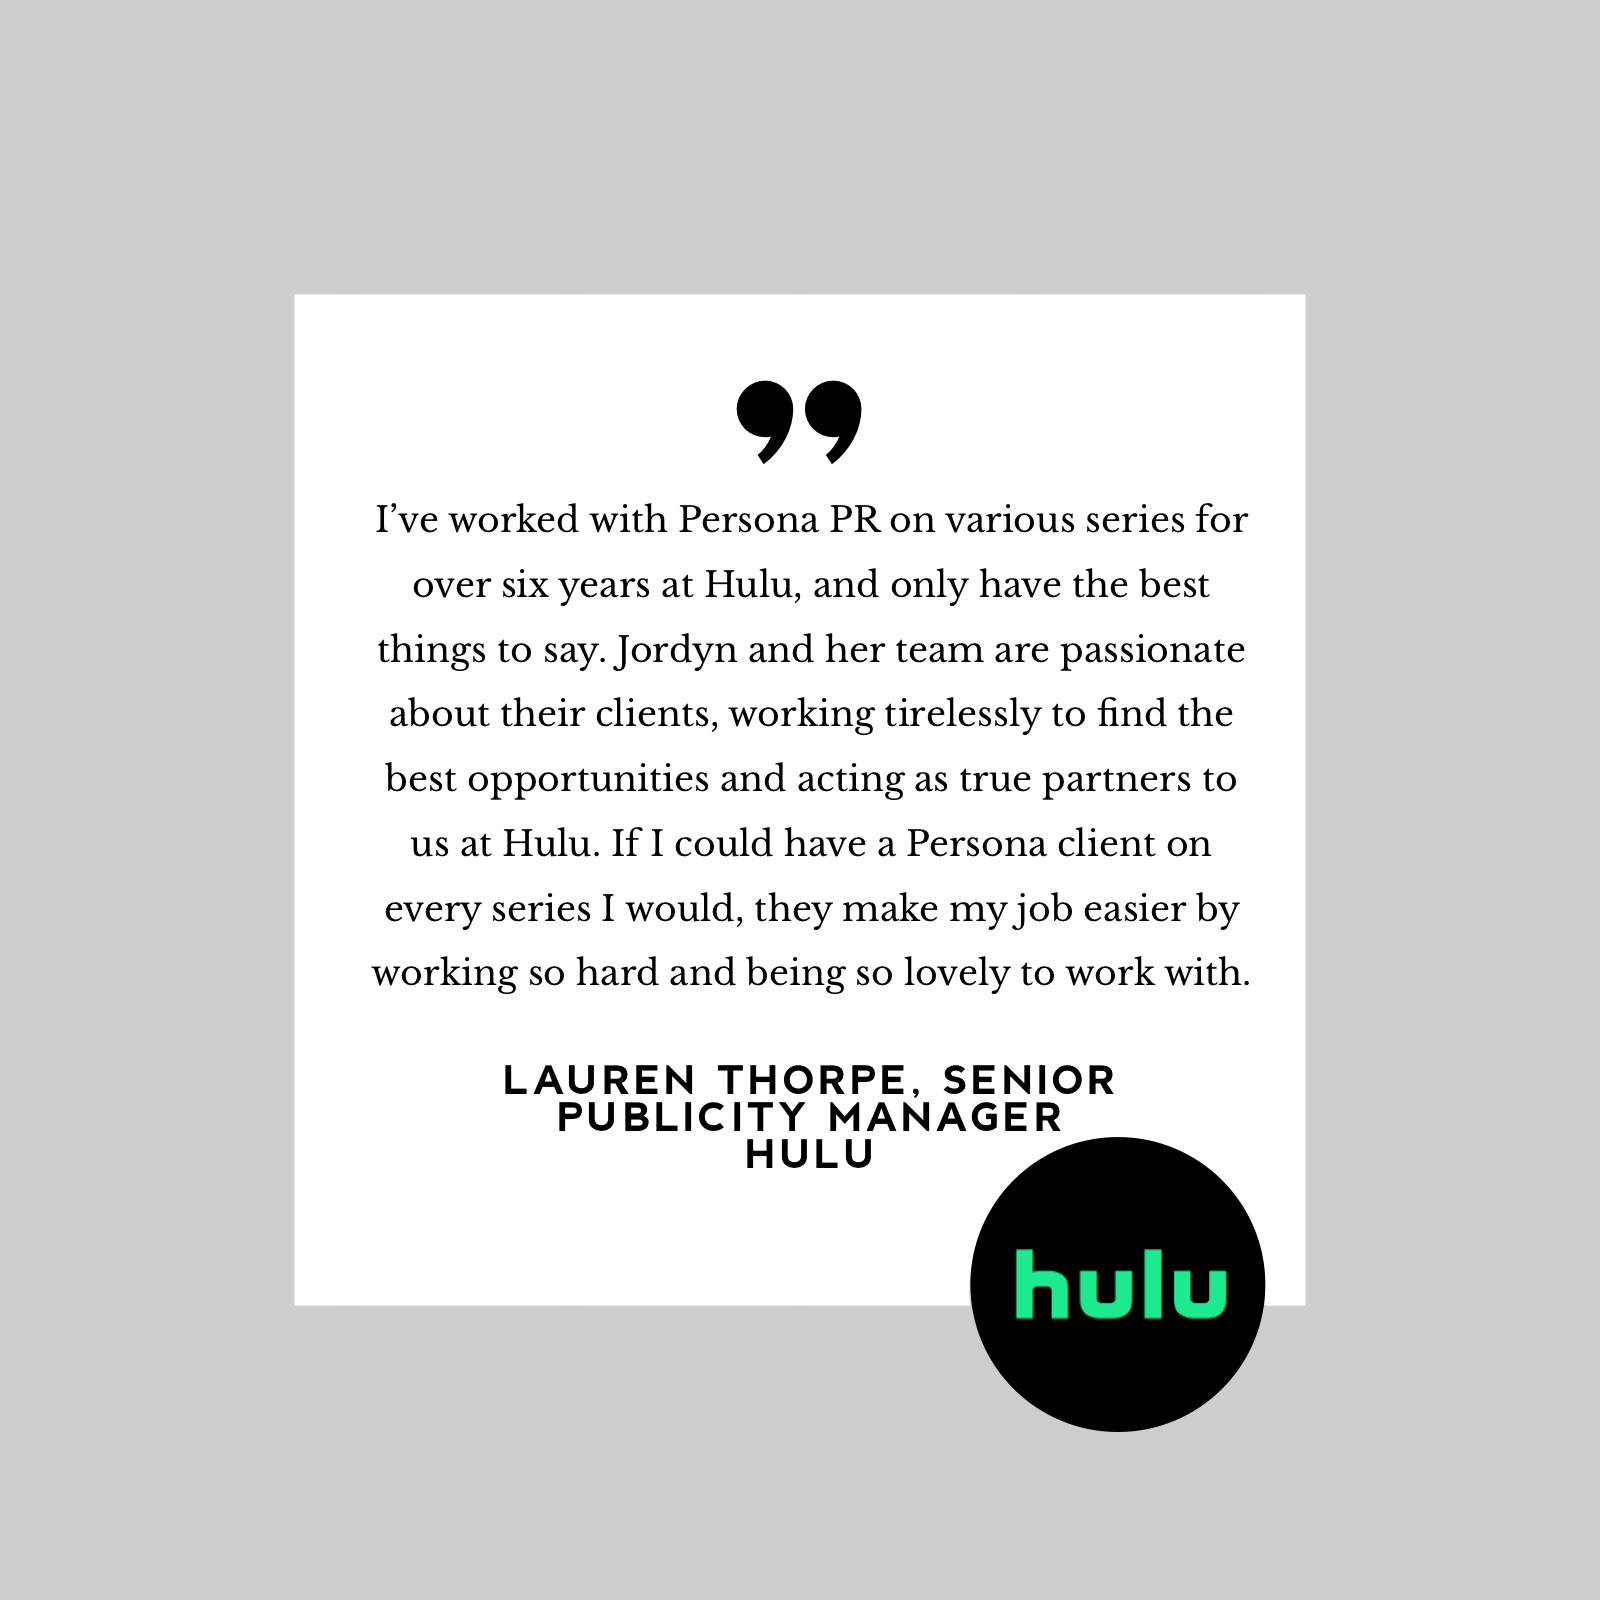 Testimonial from Lauren Thorpe, Senior Publicity Manager, Hulu